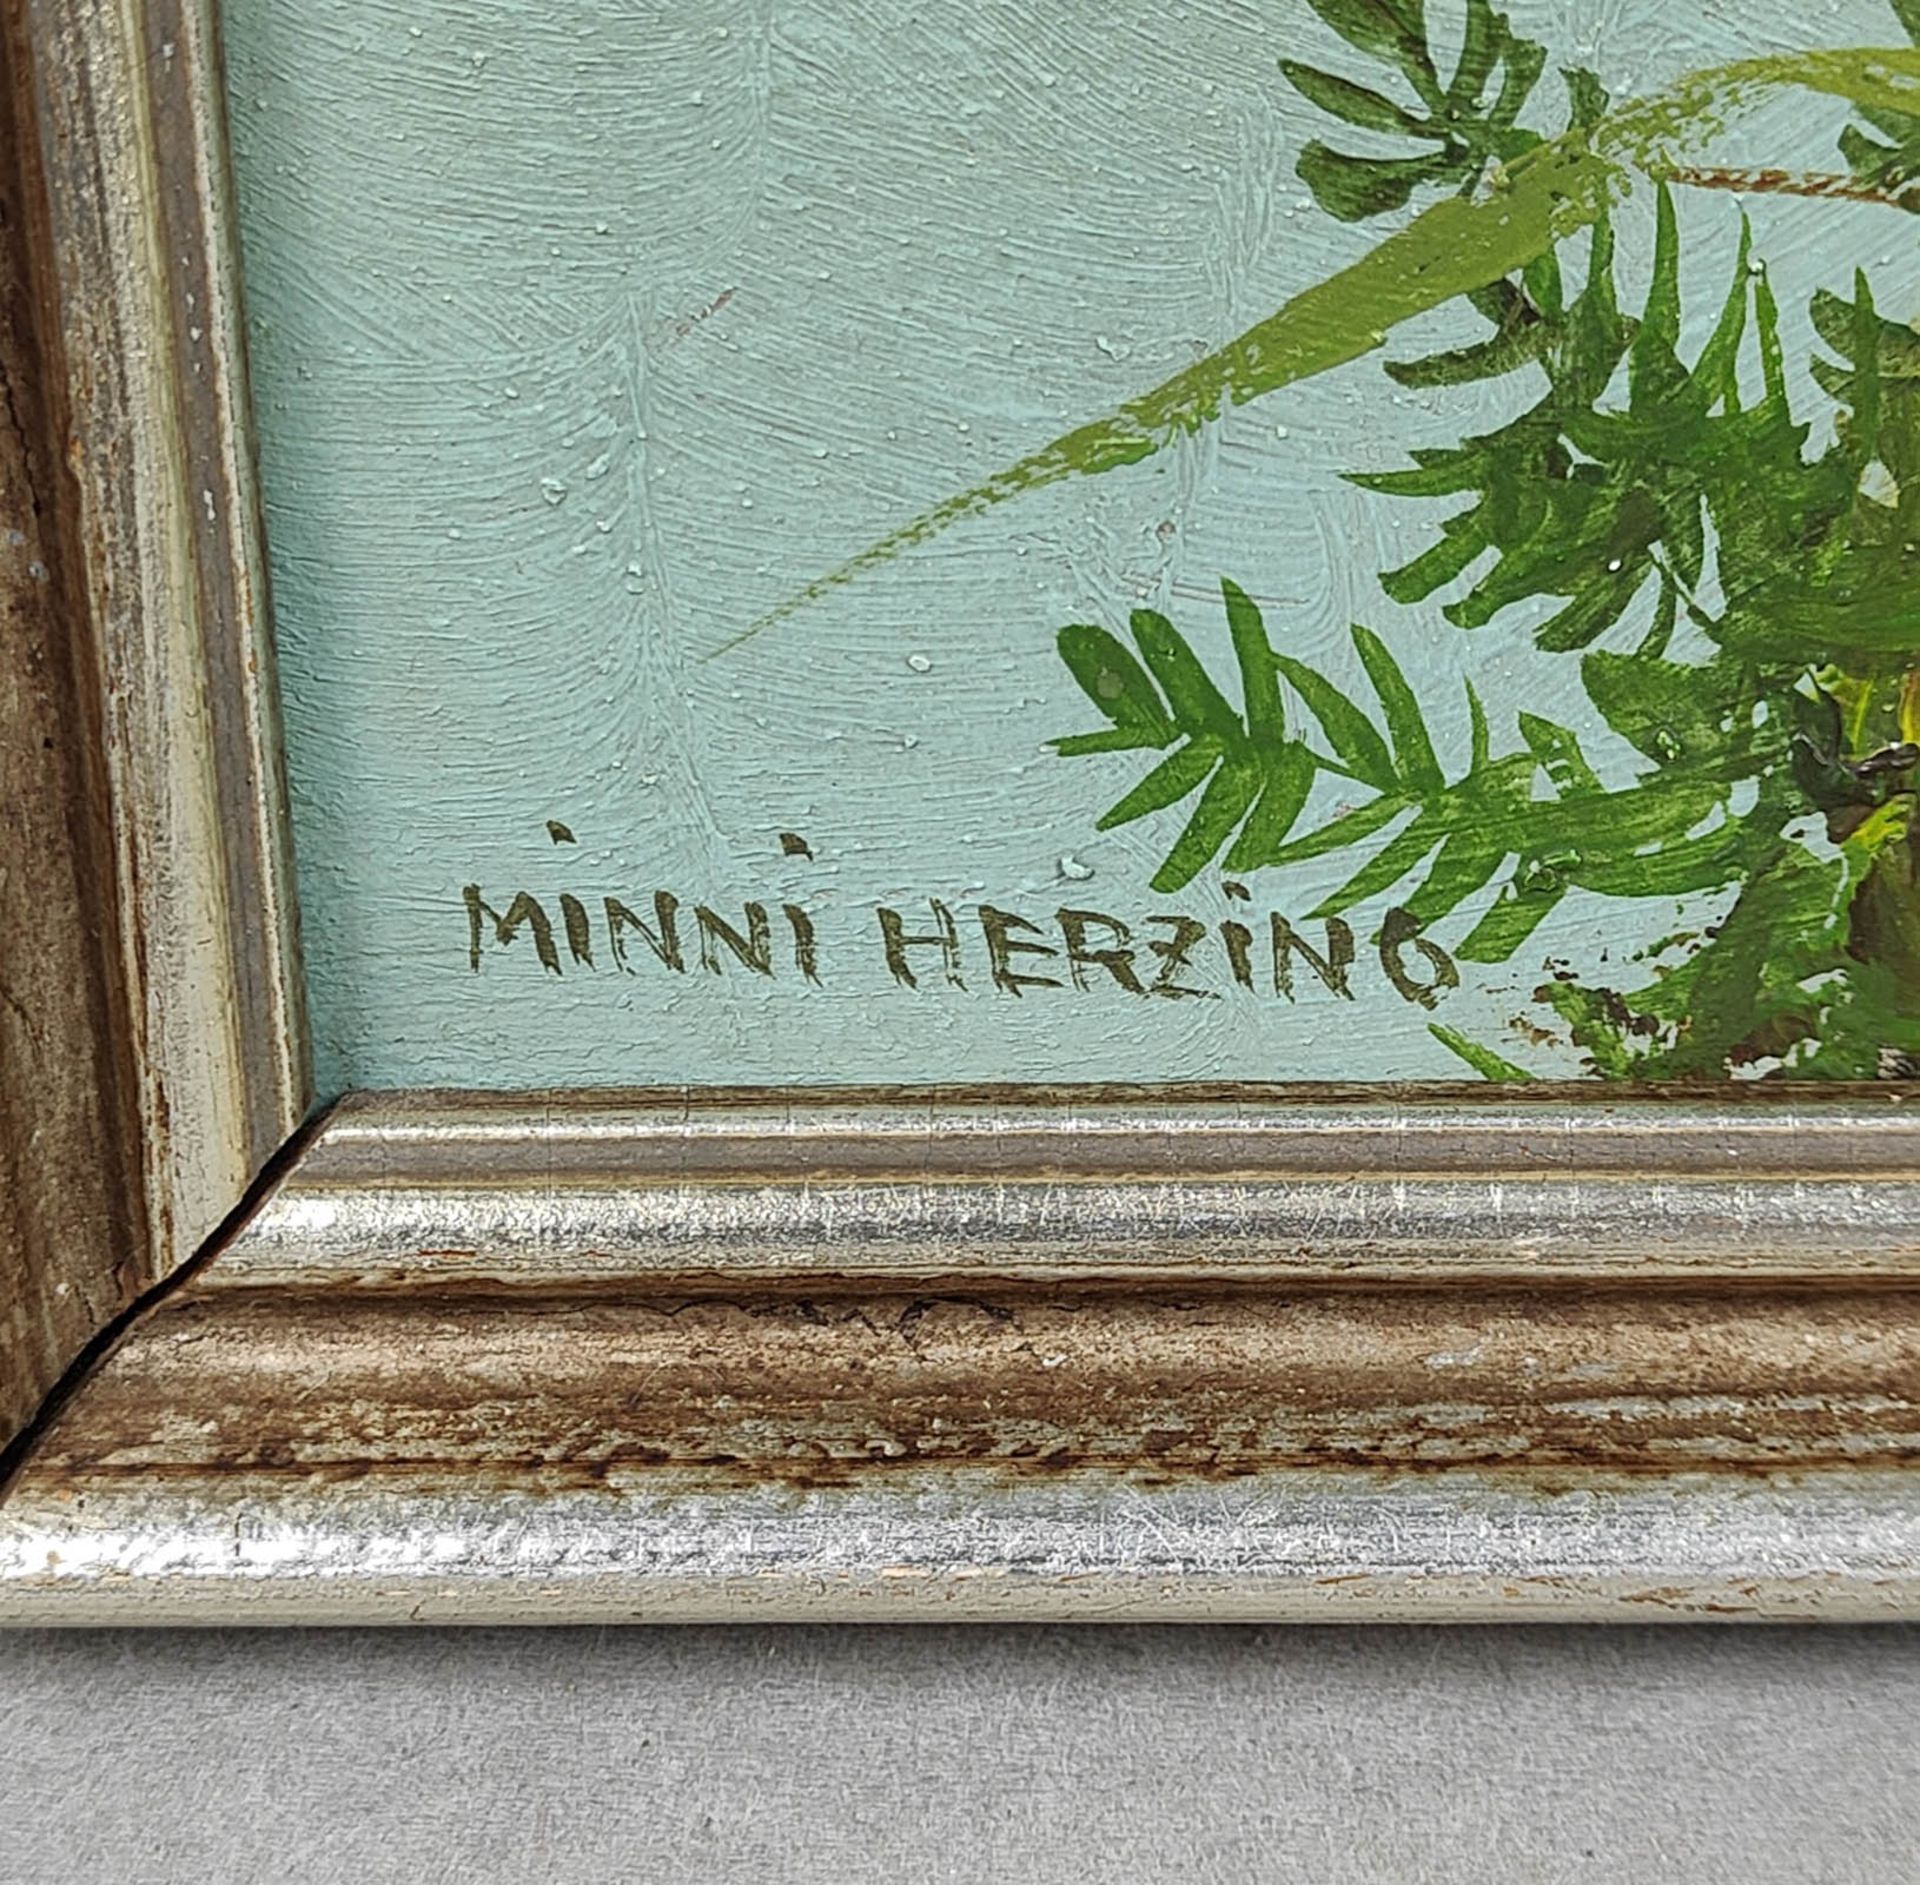 Alpenblumen - Herzing, Minni - Image 2 of 2